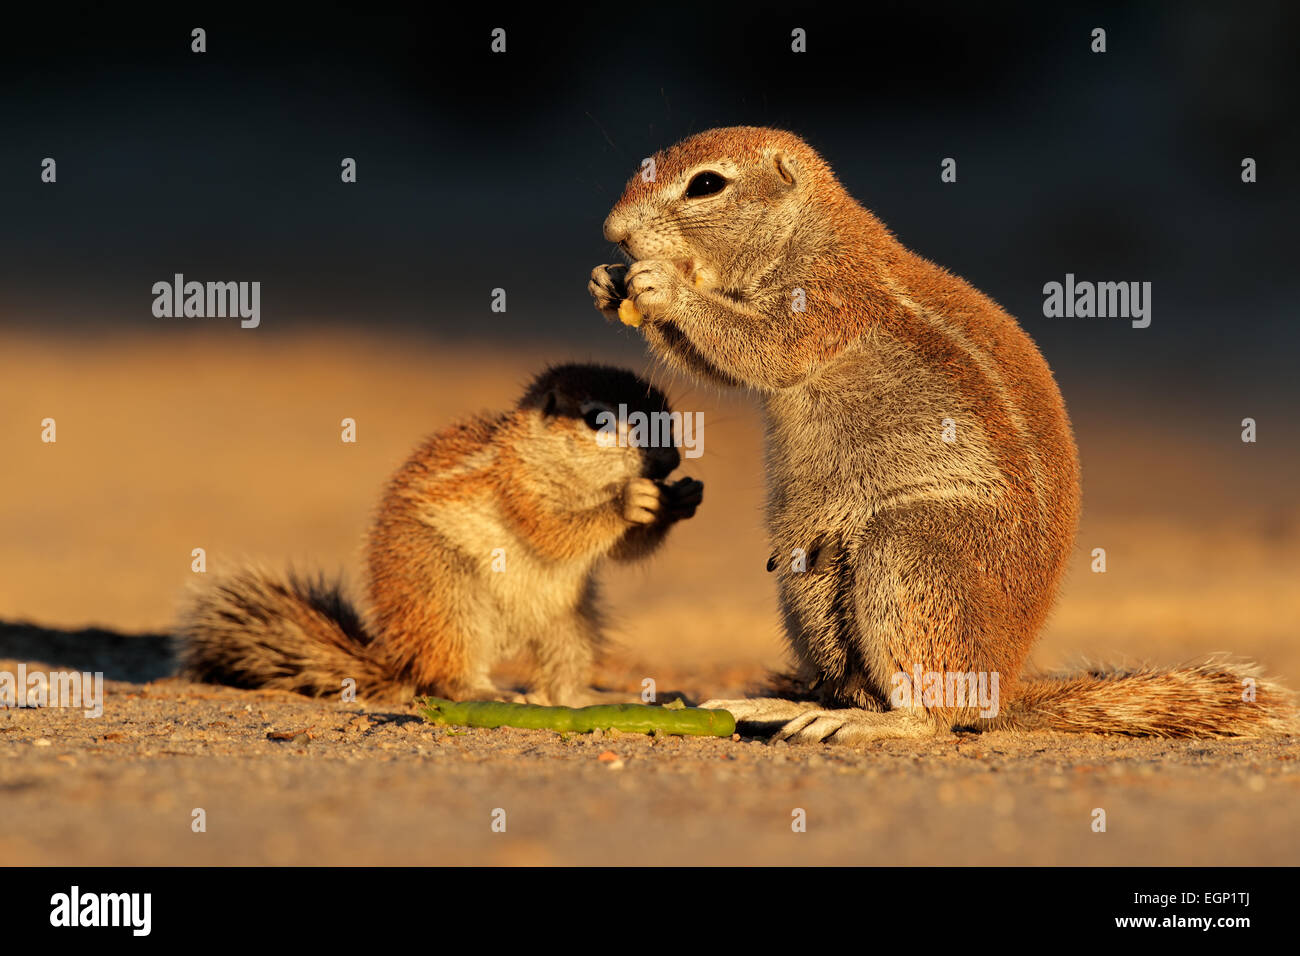 Feeding ground squirrels (Xerus inaurus) in late afternoon light, Kalahari desert, South Africa Stock Photo